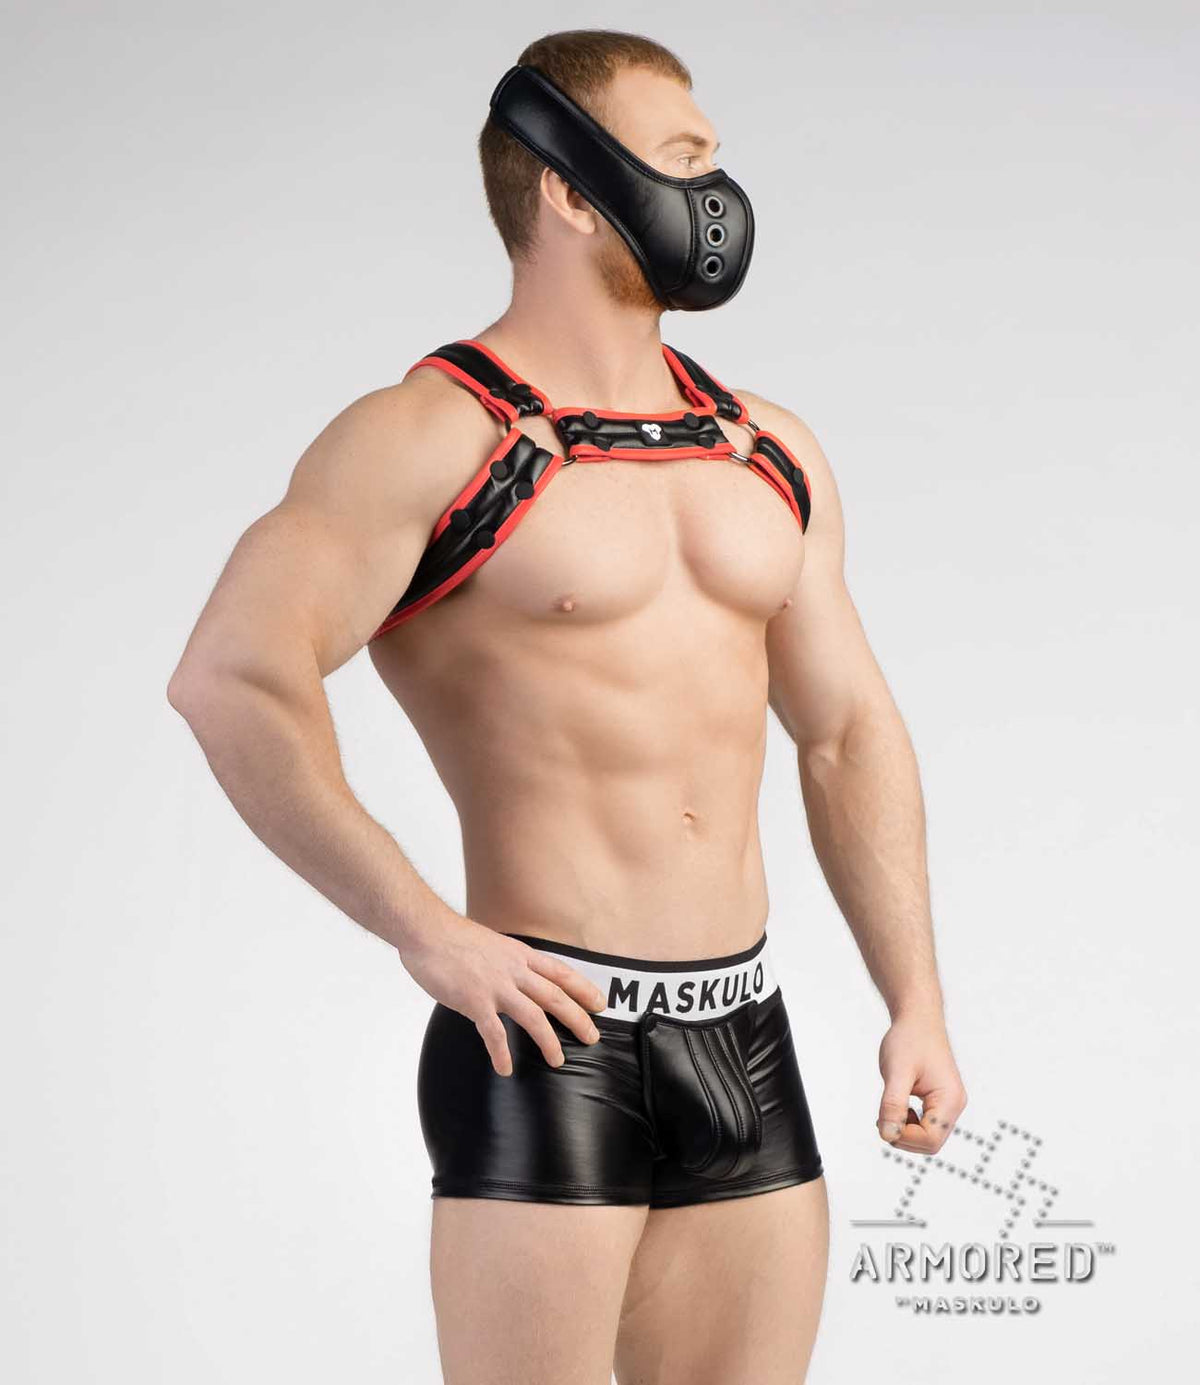 Armored Next. Men's Fetish Bulldog Harness. Red+Black